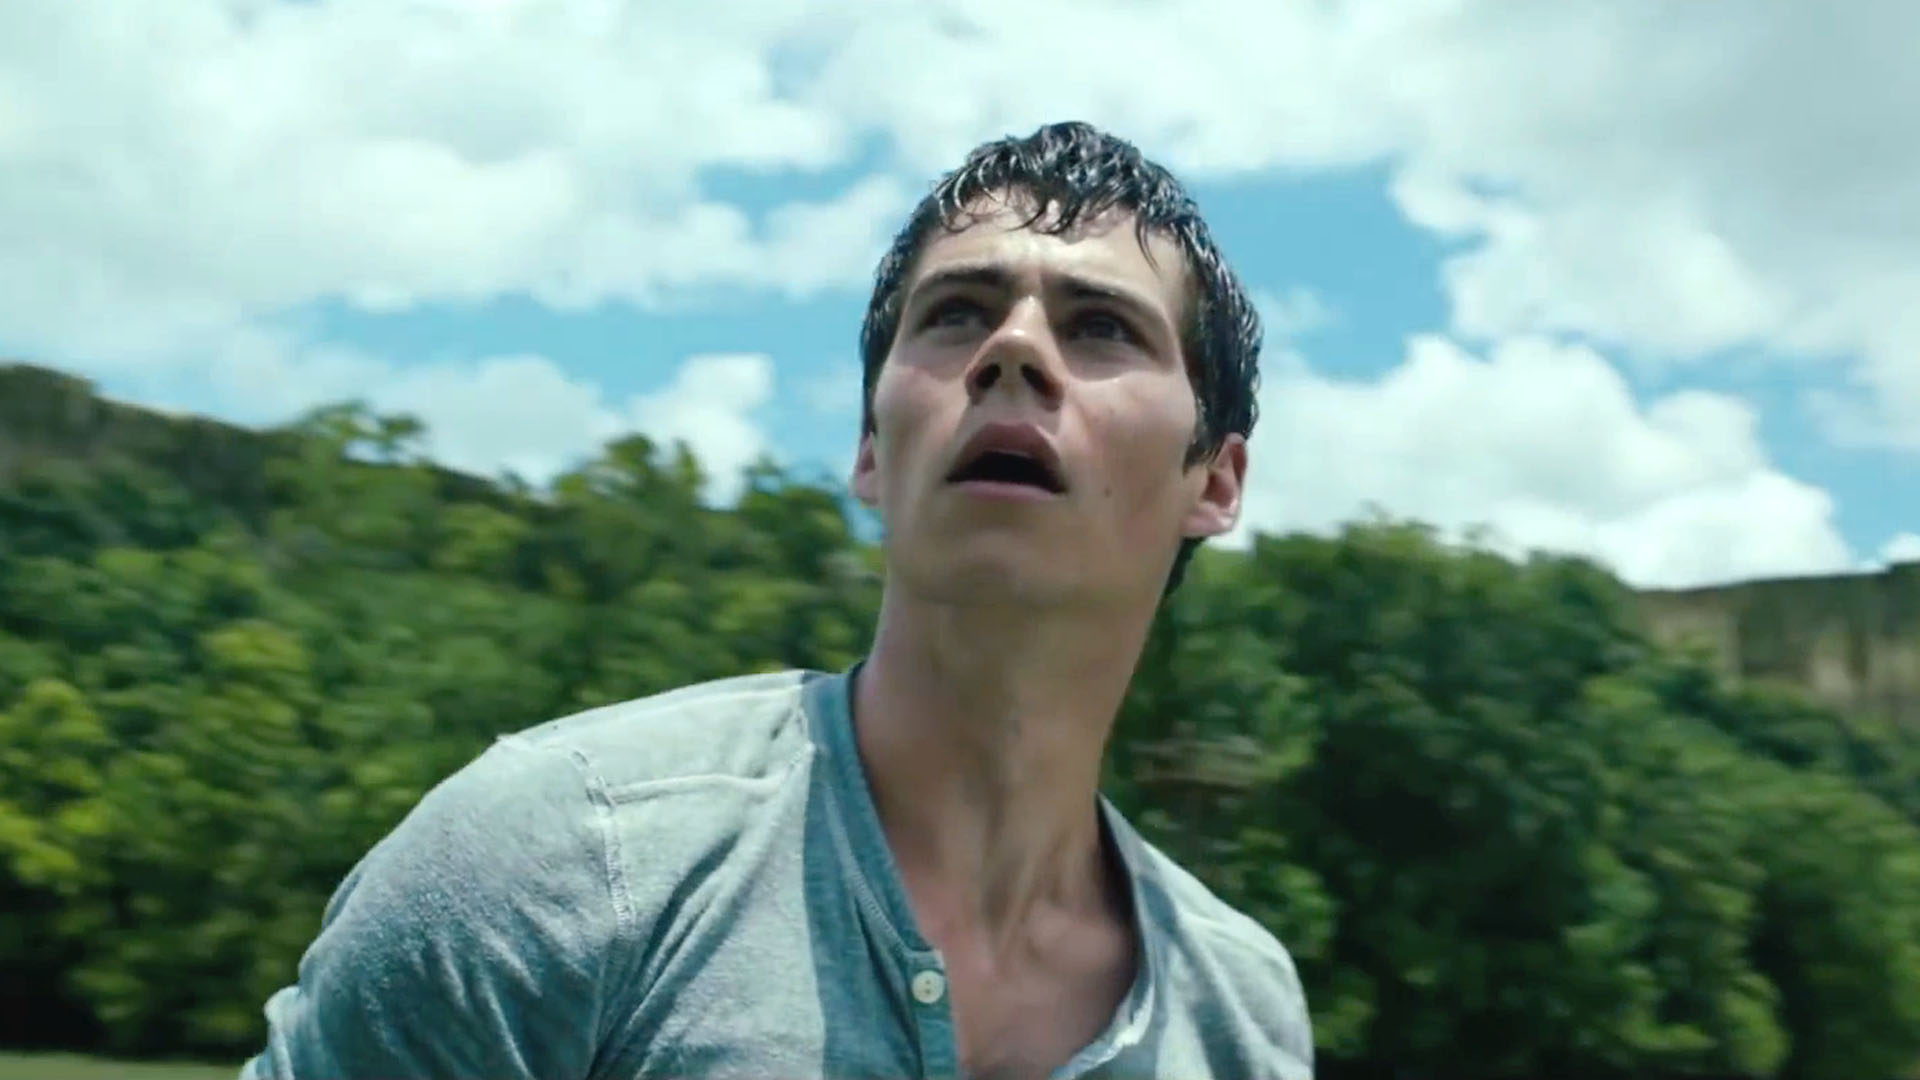 Maze Runner: The Scorch Trials Official Trailer #1 (2015) - Dylan O'Brien  Movie HD 